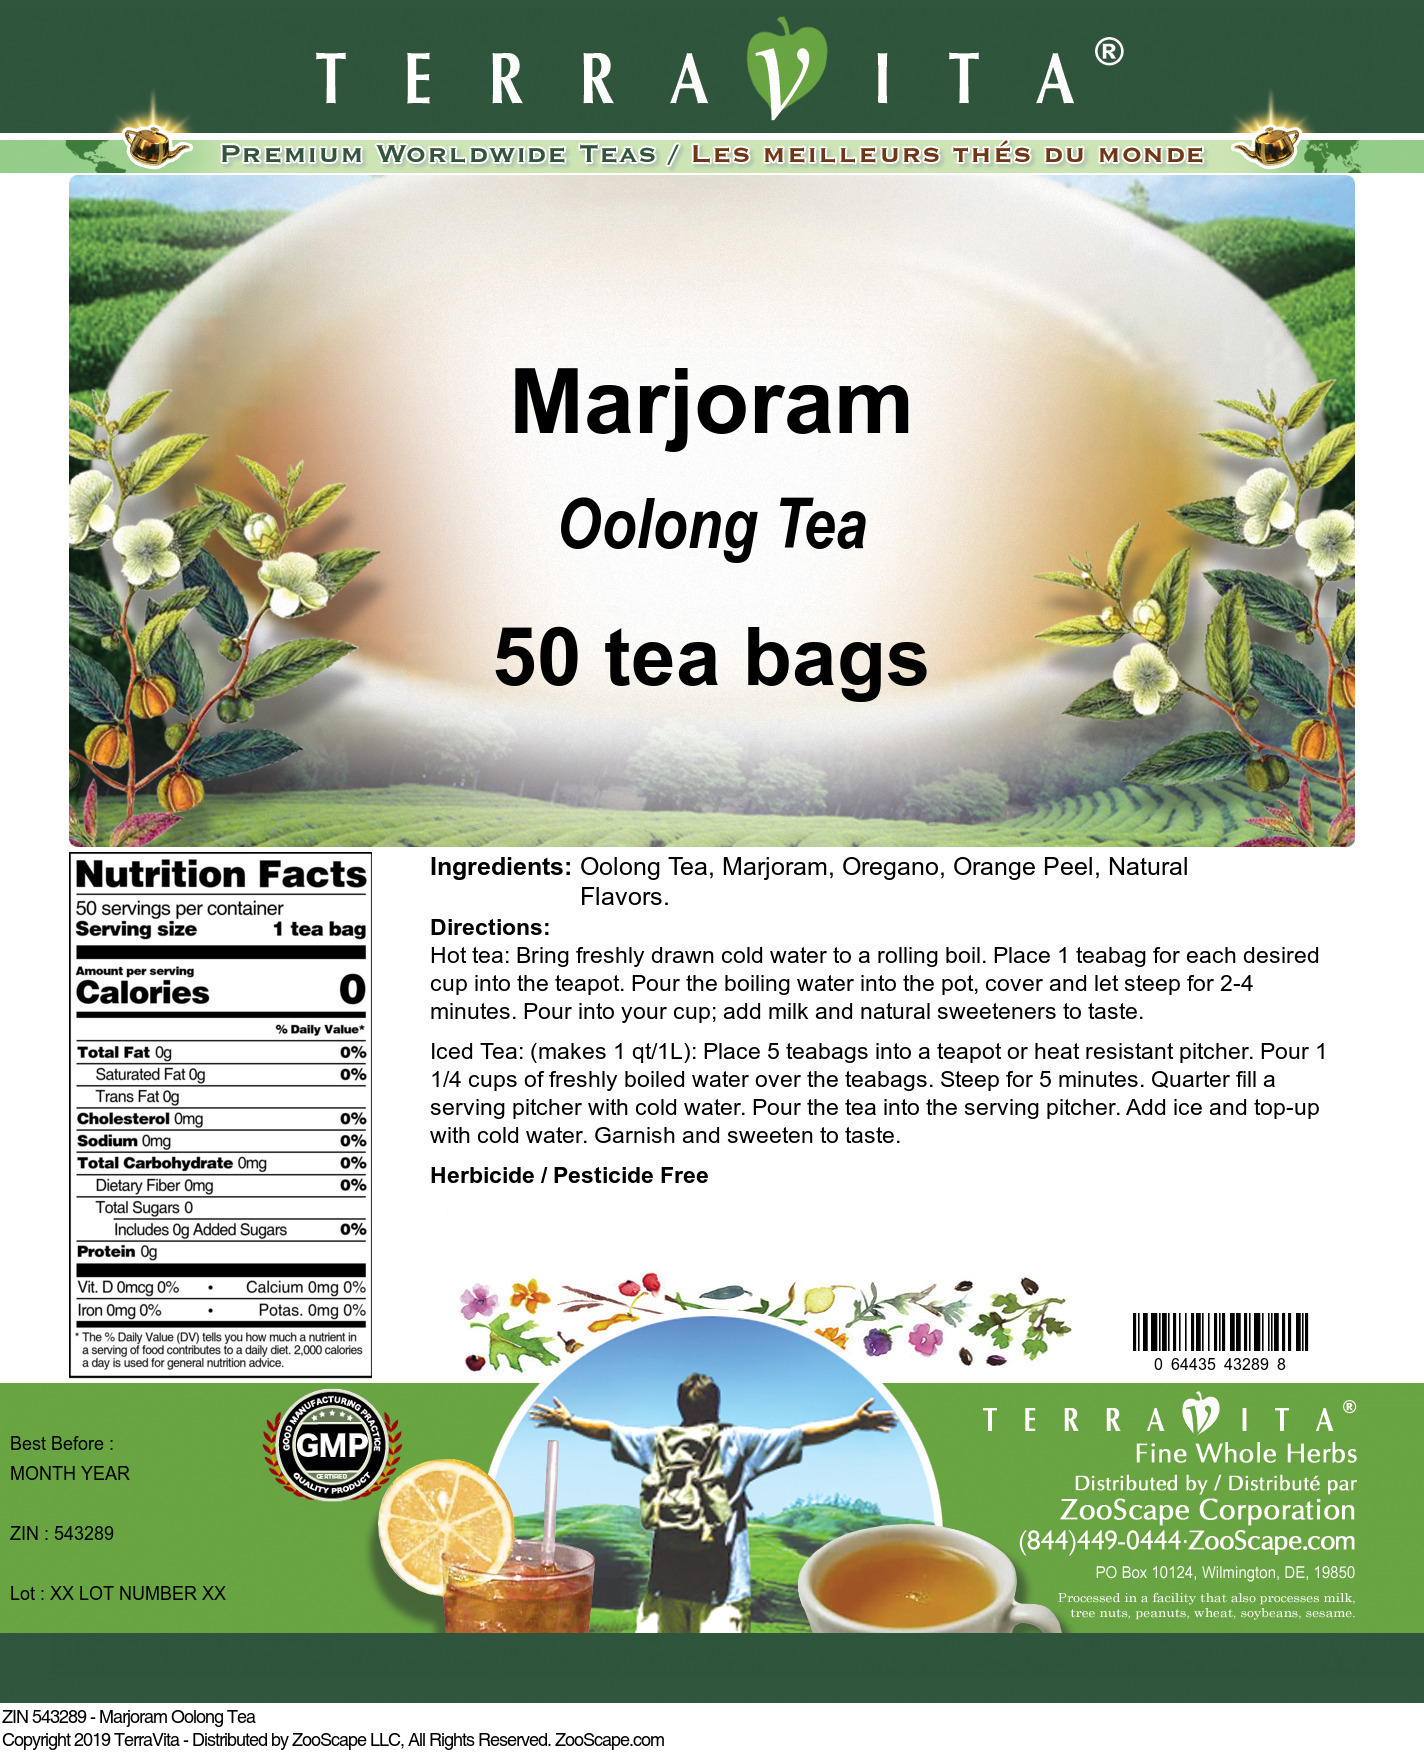 Marjoram Oolong Tea - Label